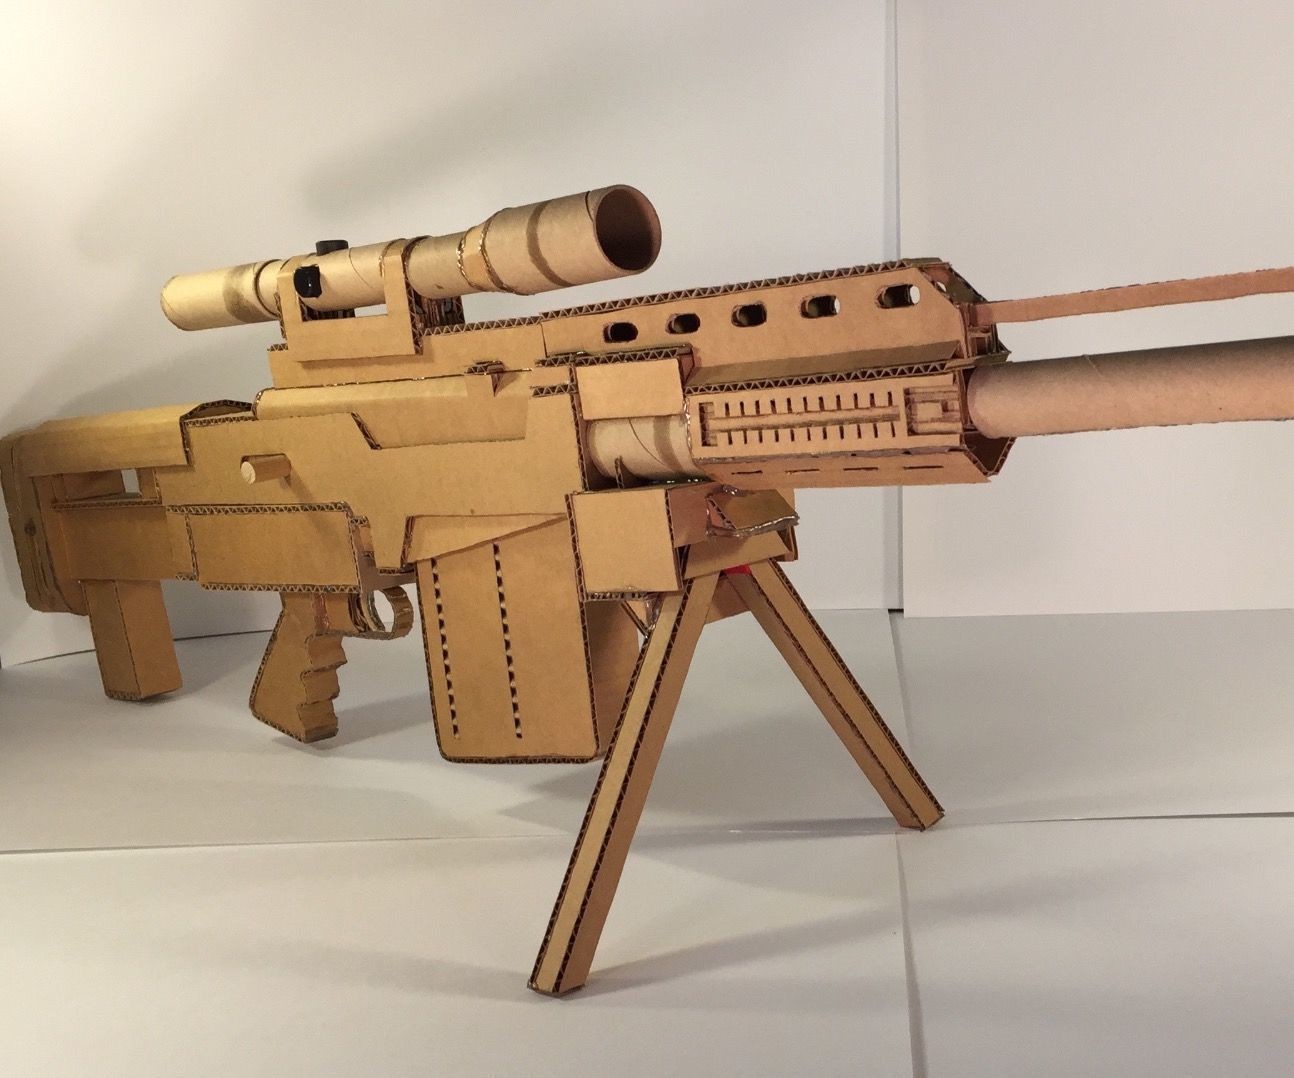 Pistol Papercraft Fully Functioning Cardboard as 50 Sniper Rifle